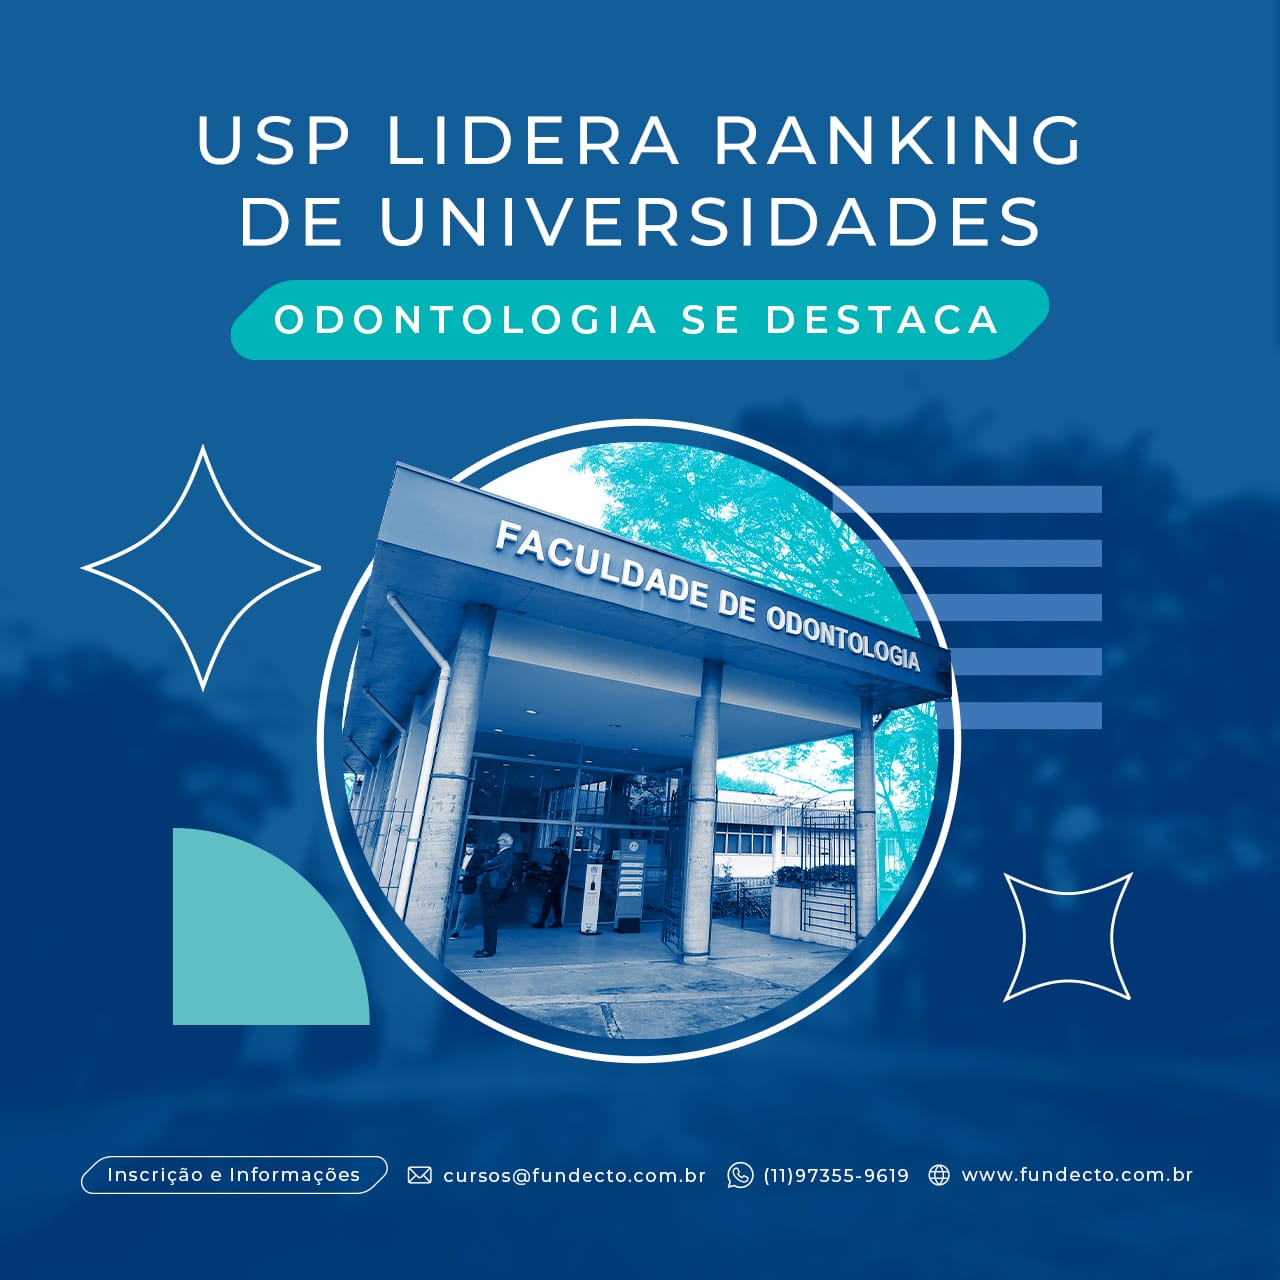 USP lidera ranking de universidades – ODONTOLOGIA SE DESTACA